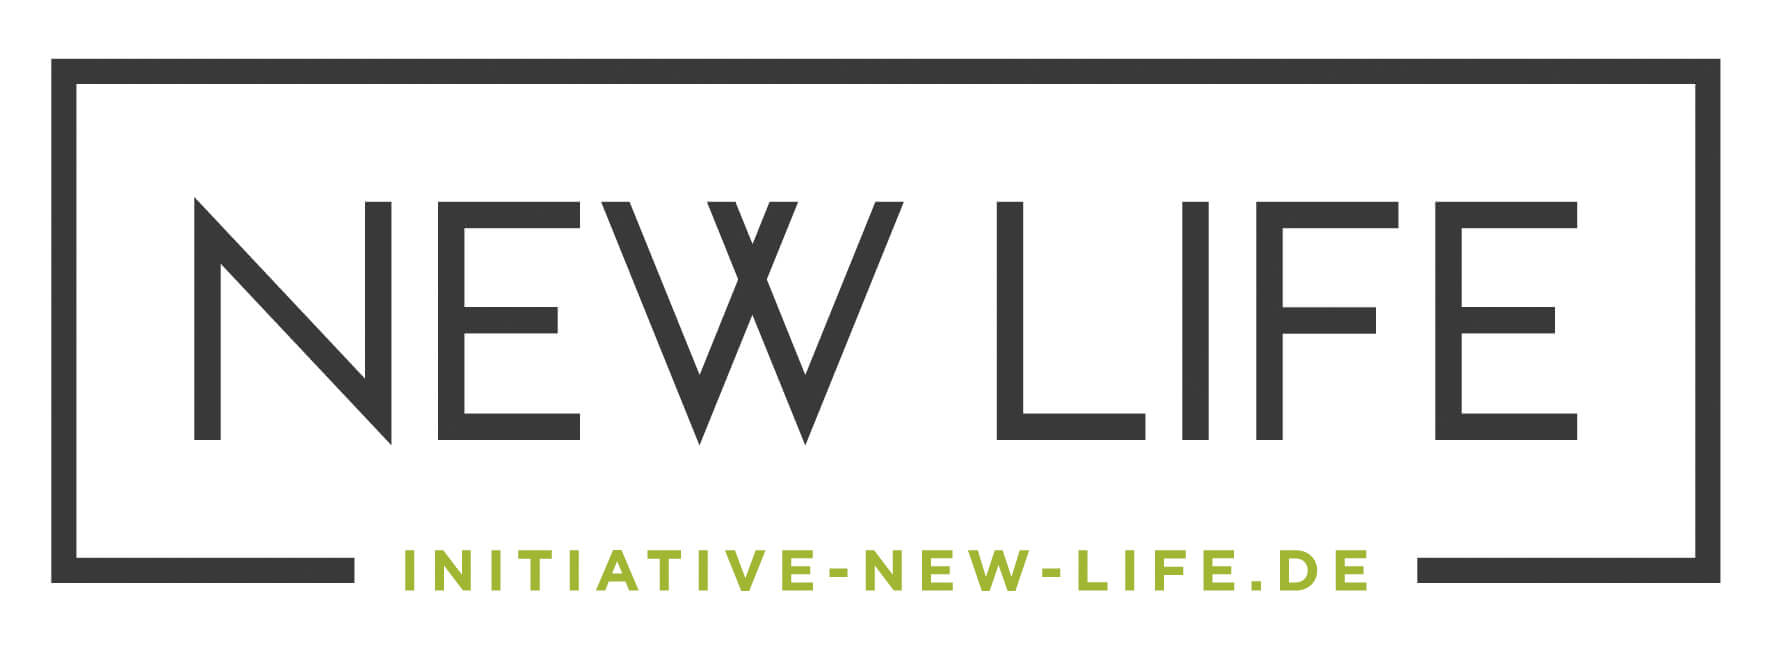 New life фф. The New Life. New Life logo. New Life картинки. Trendnewlife логотип.